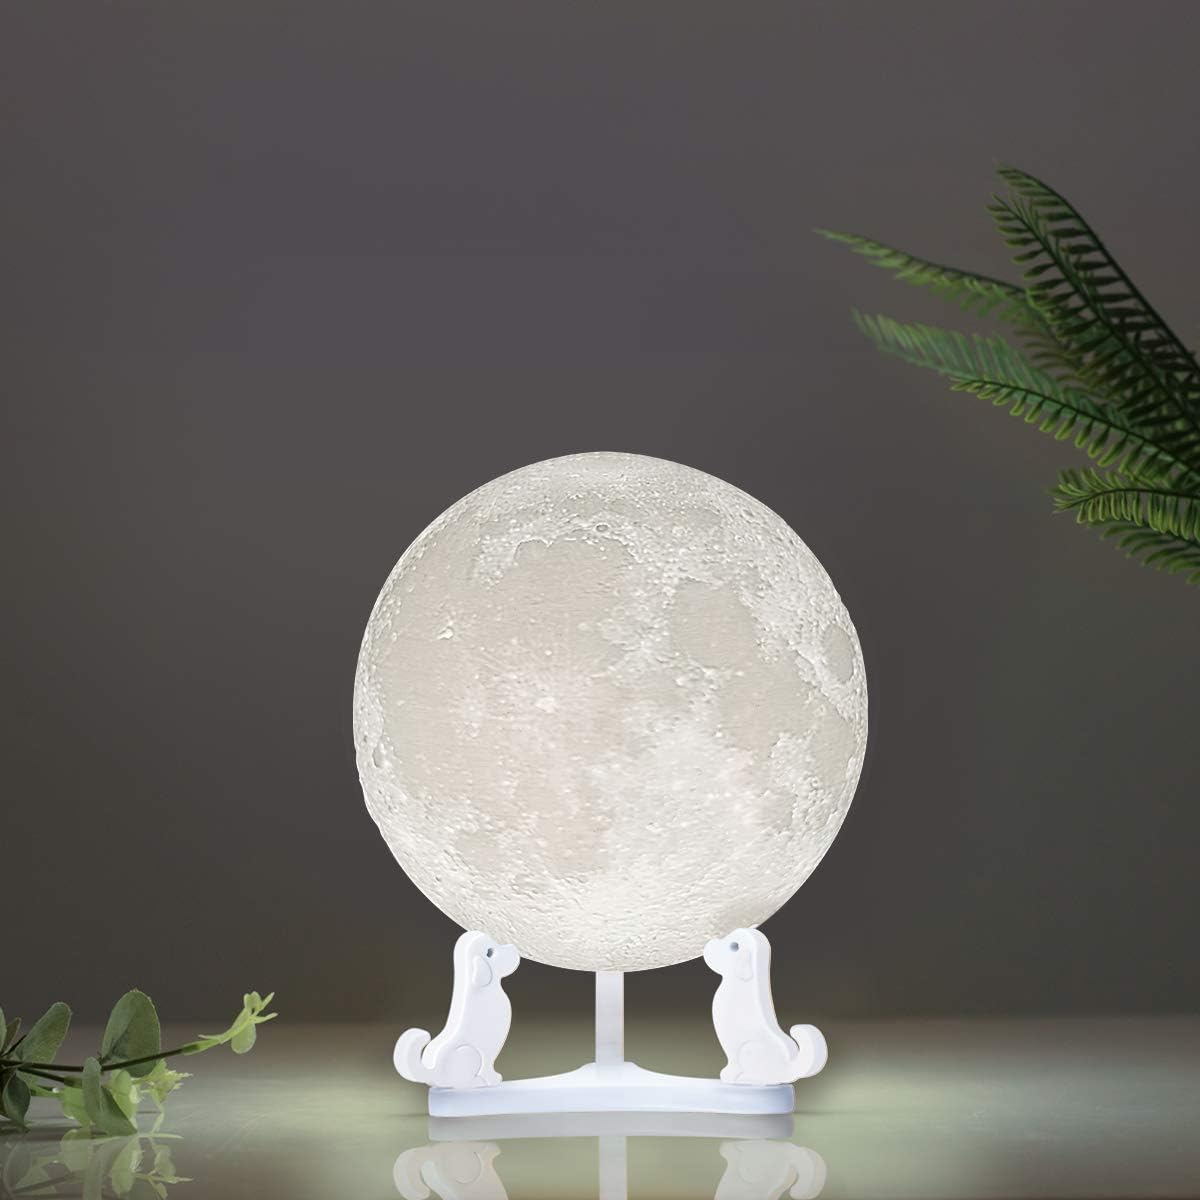 Mydethun Moon Lamp Moon Light Night Light for Kids Gift for Women USB Charging a 